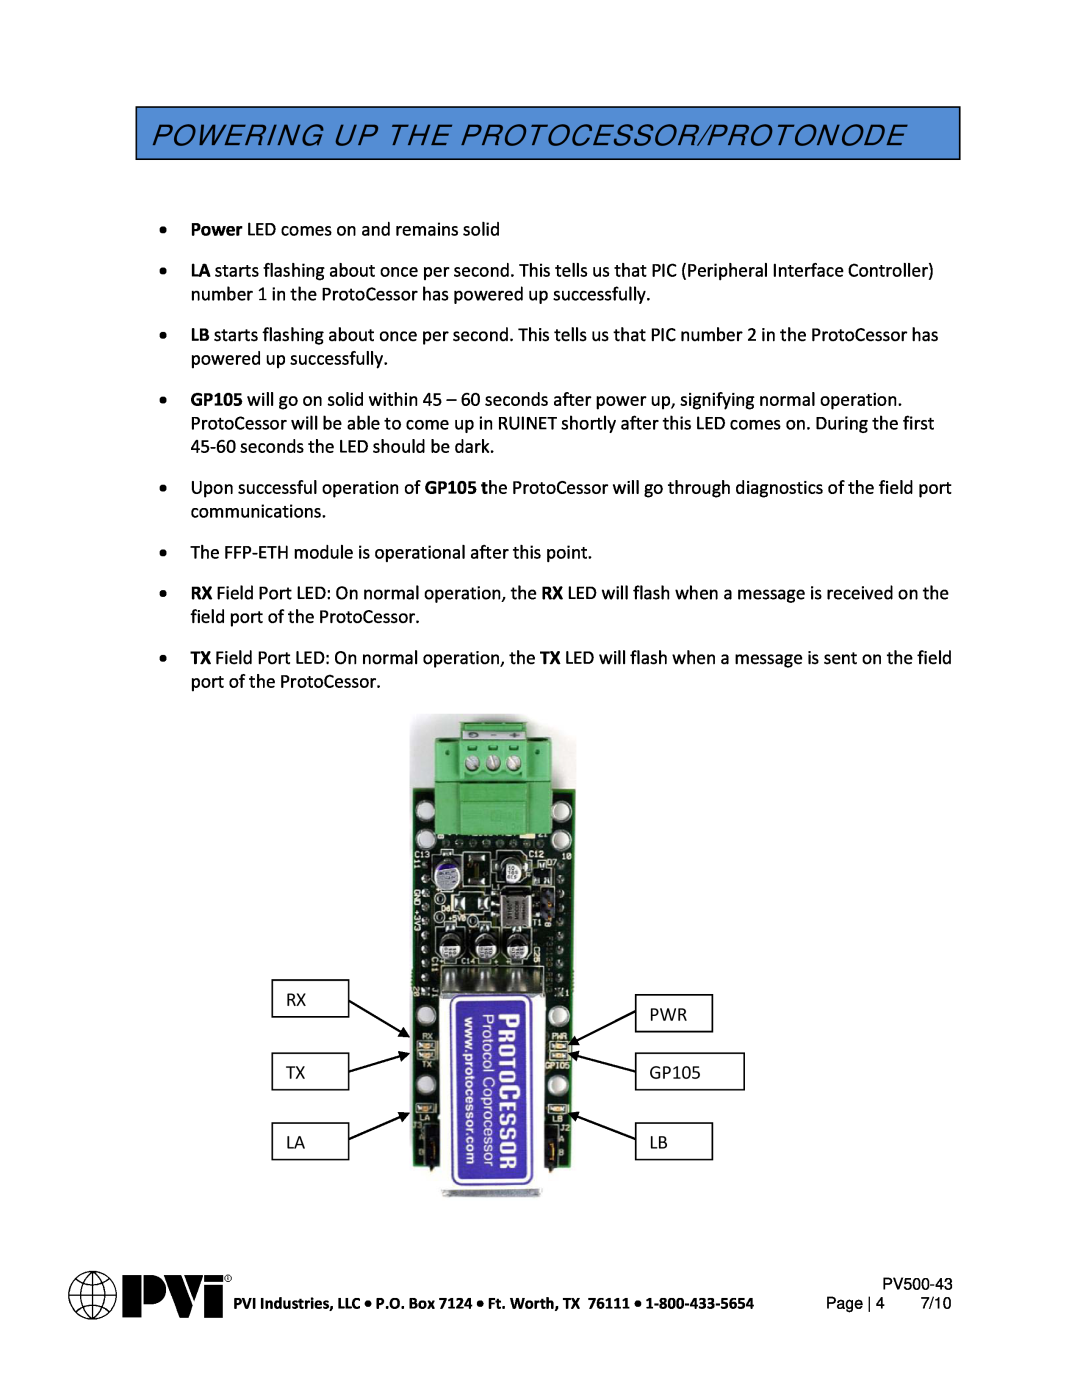 PVI Industries PV500-43 manual Powering Up The Protocessor/Protonode 